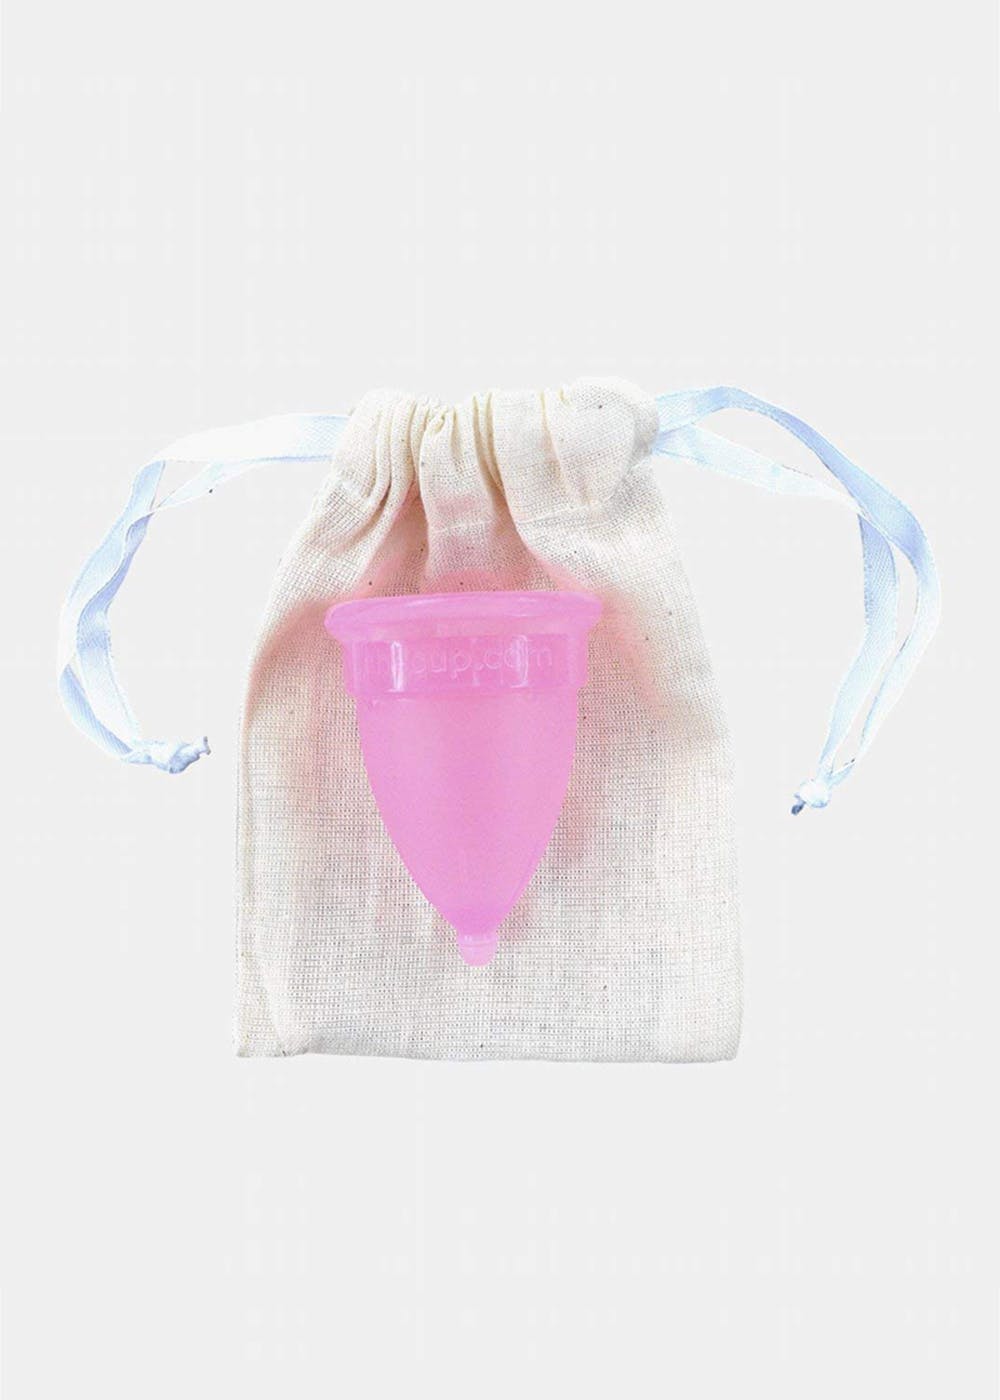 SHECUP C (C = Classic short knob) Silicone Menstrual Cup : :  Health & Personal Care